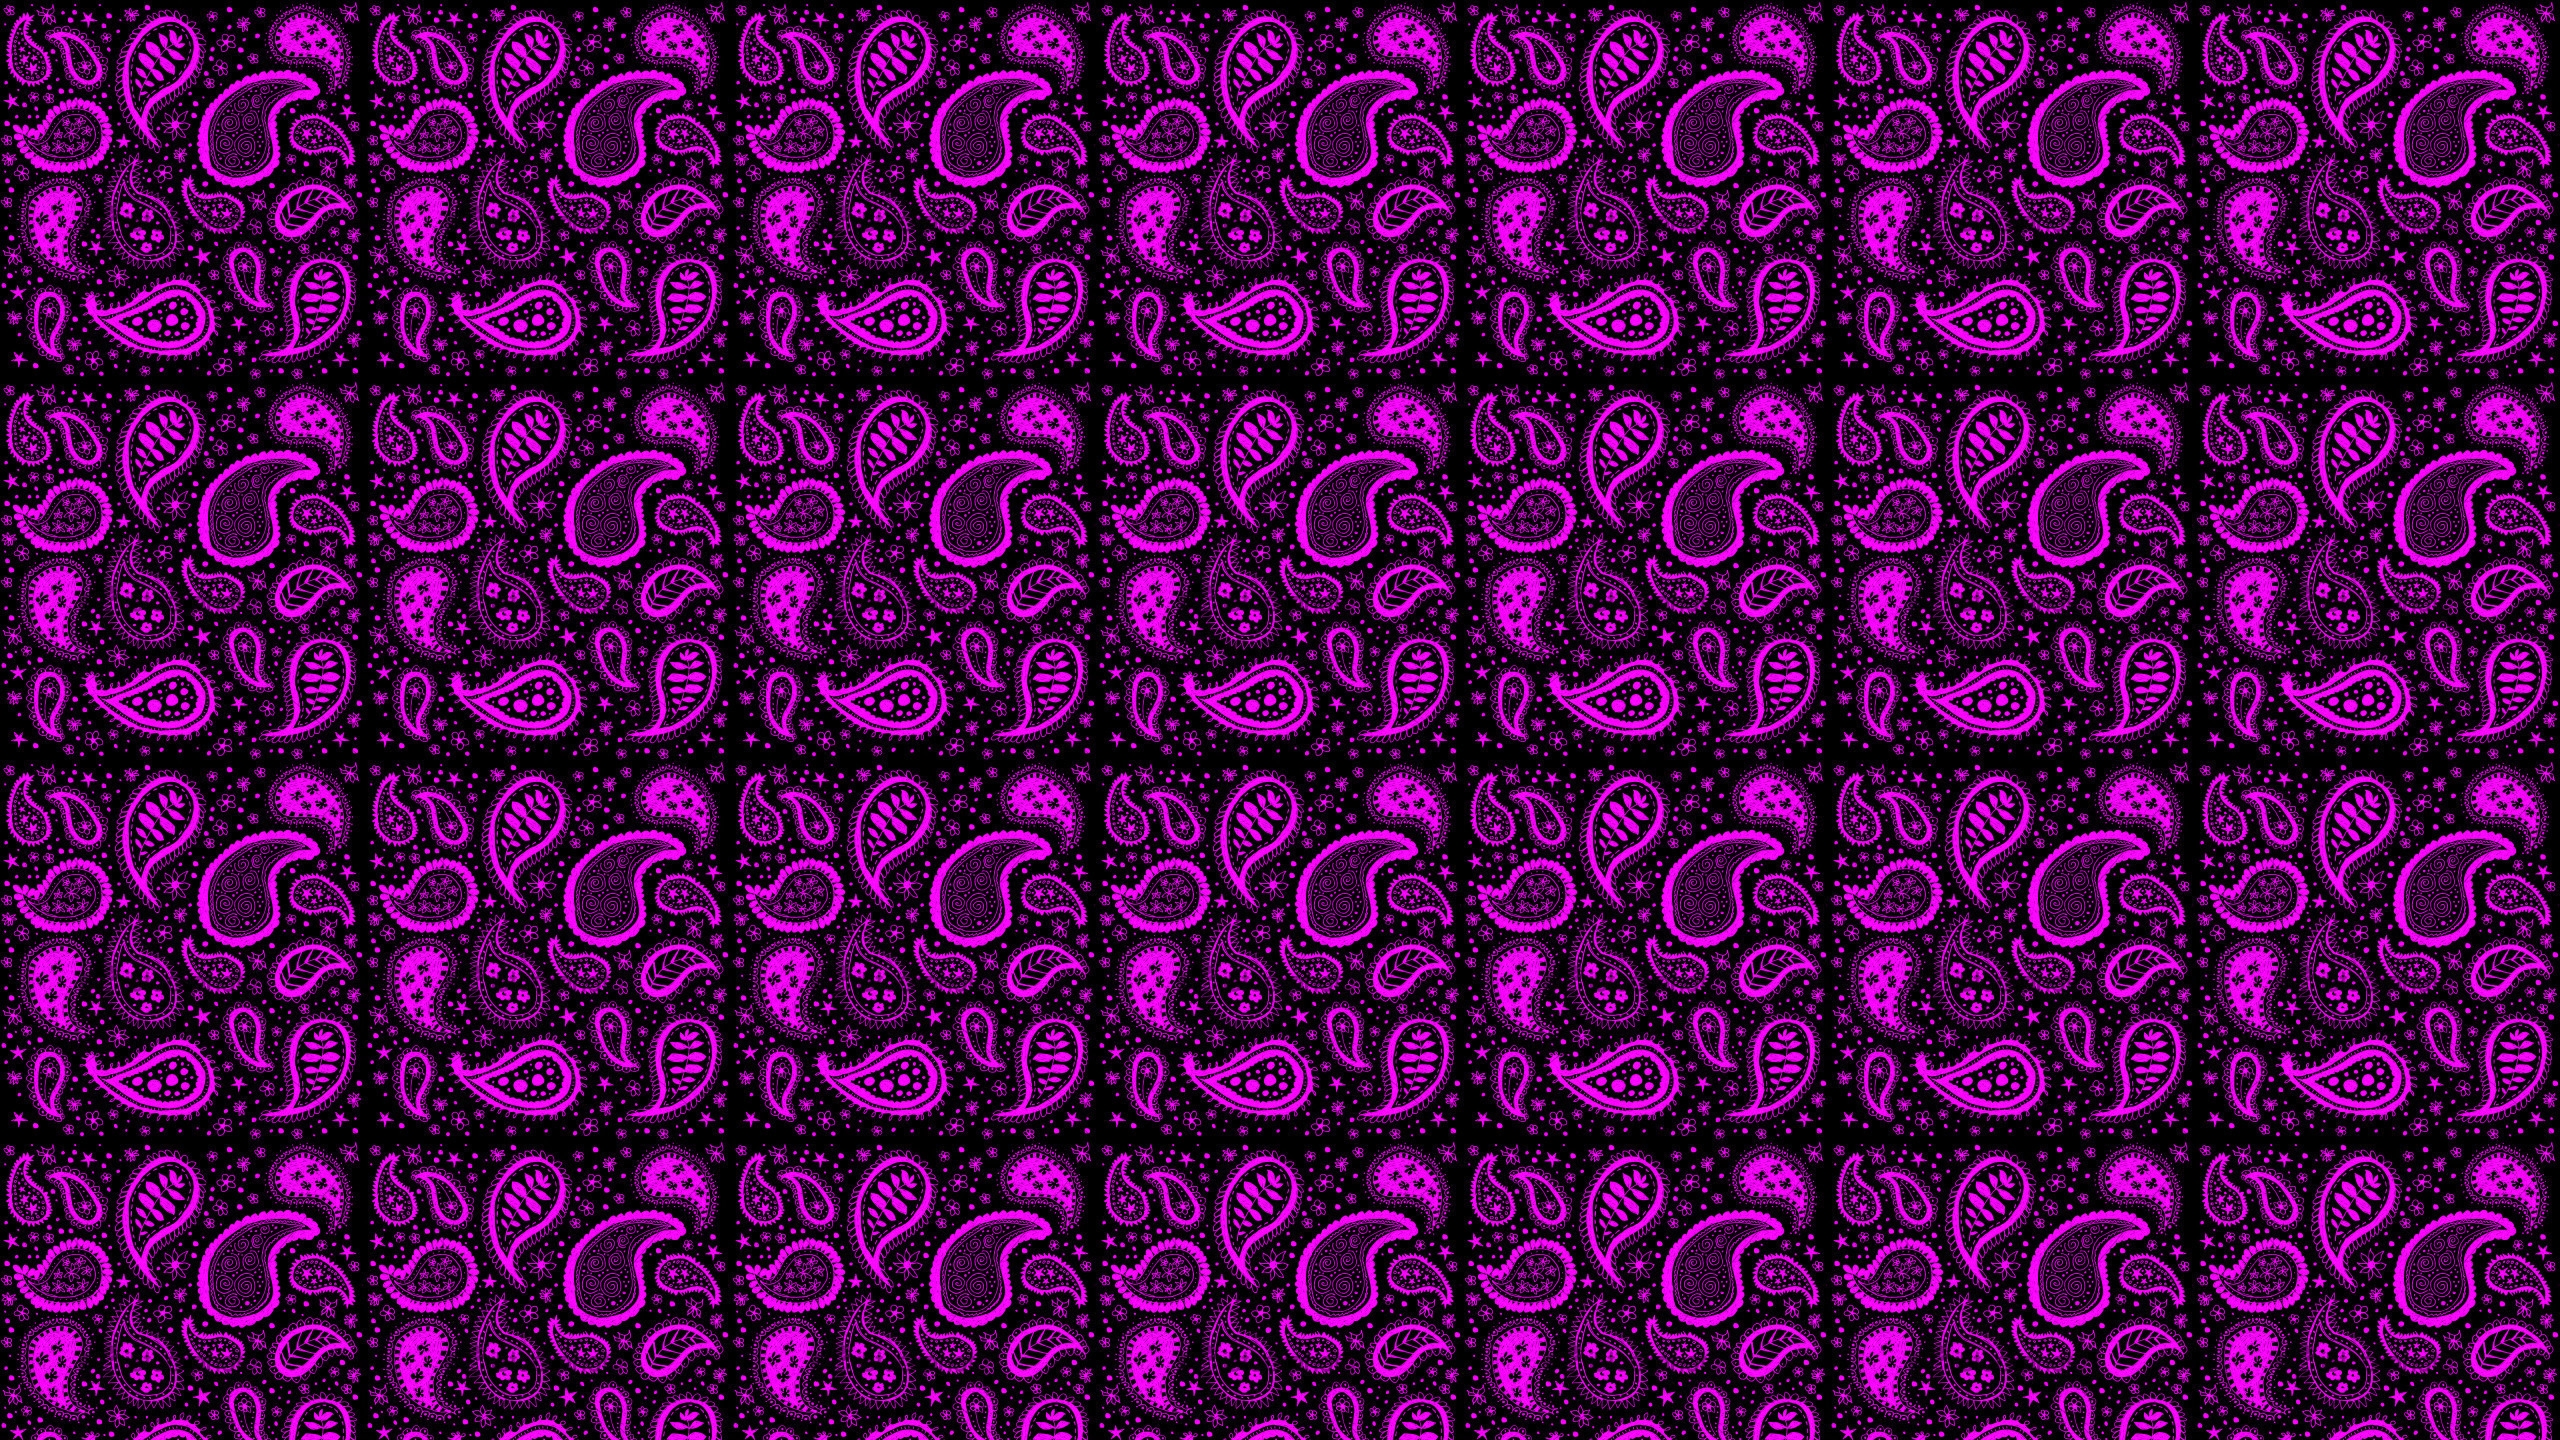 2560x1440 images of pink bandana wallpaper sc ... 